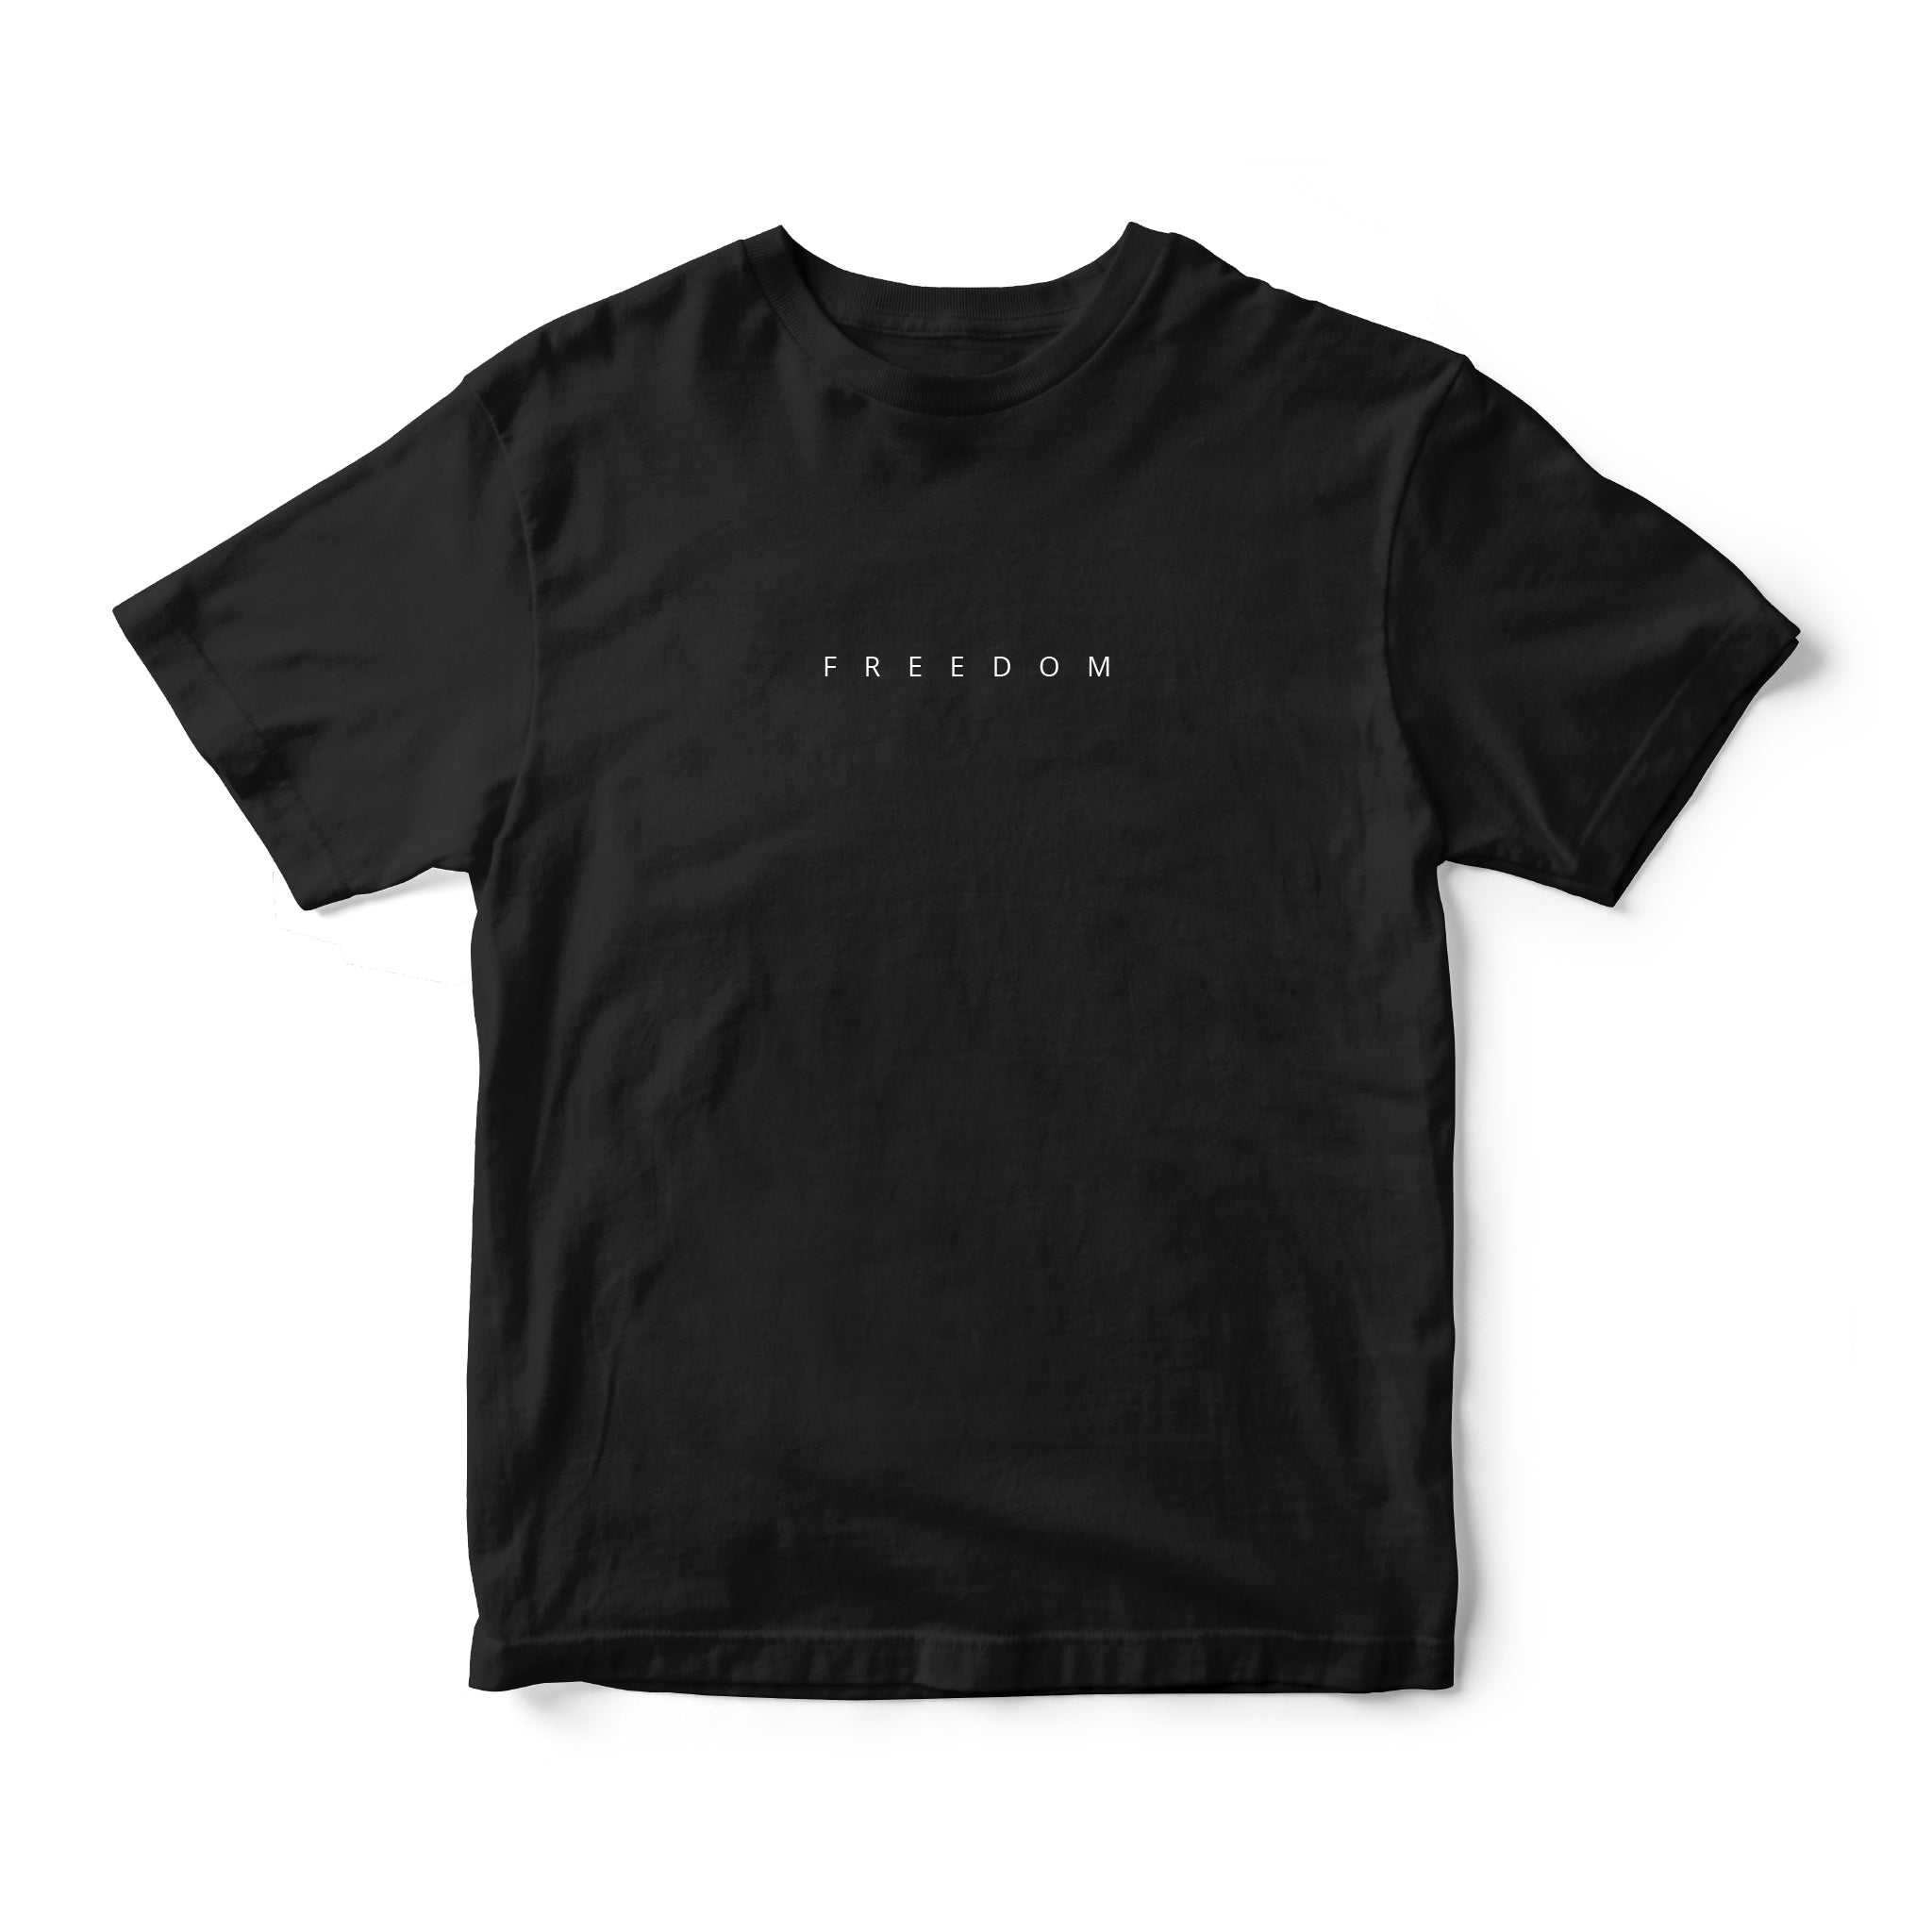 Instee Freedom T-shirt Unisex 100% Cotton